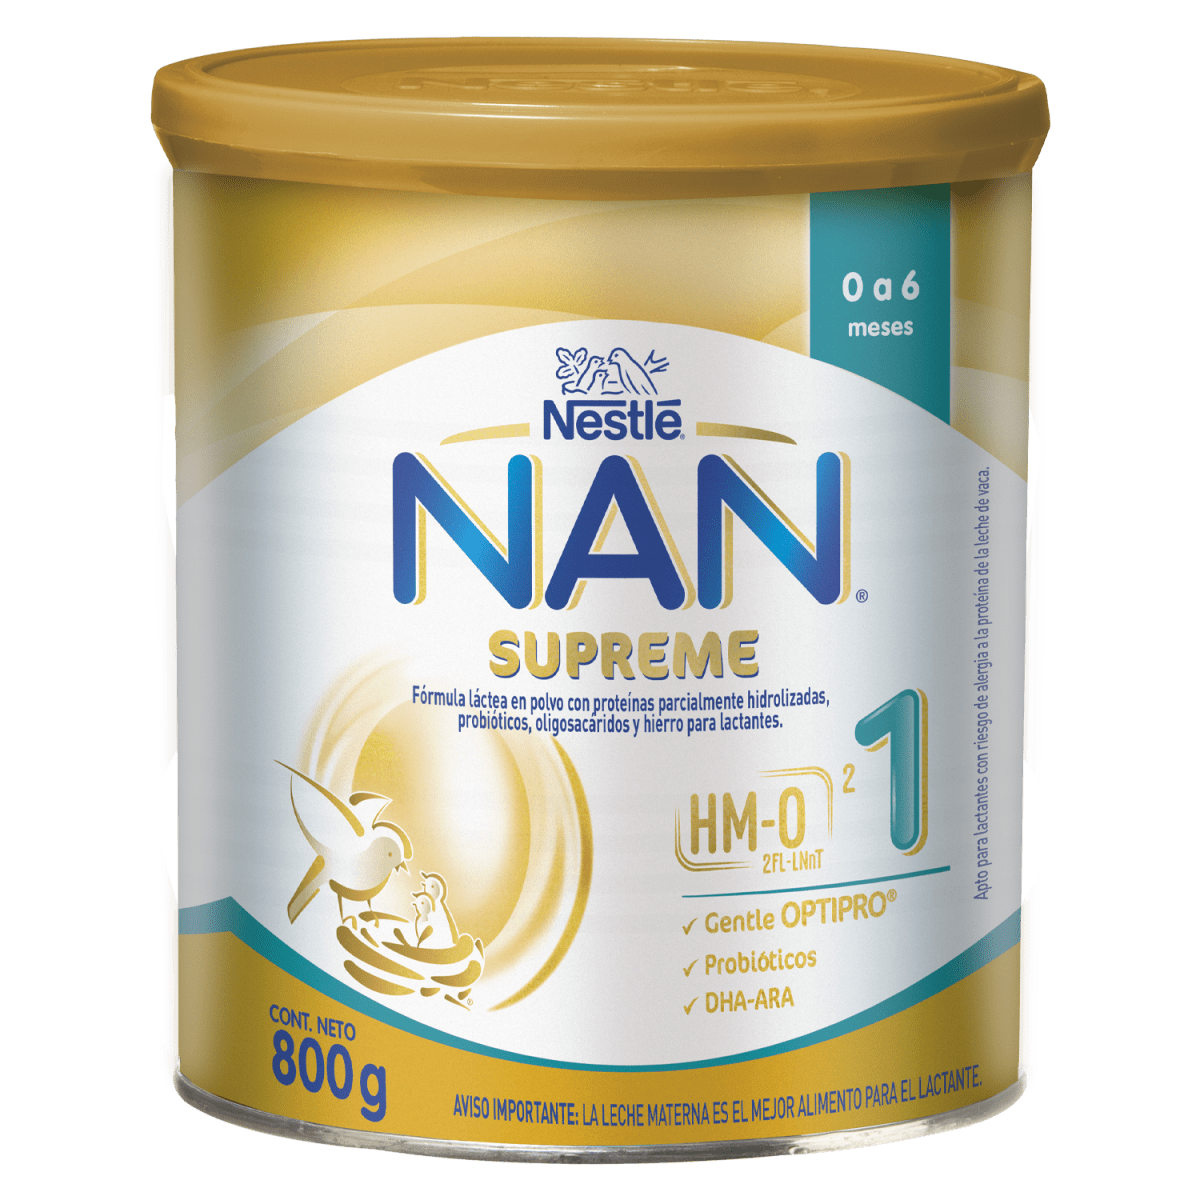 Cuál es la diferencia entre Nan Optipro y Nan Supreme? | Nutrihouse